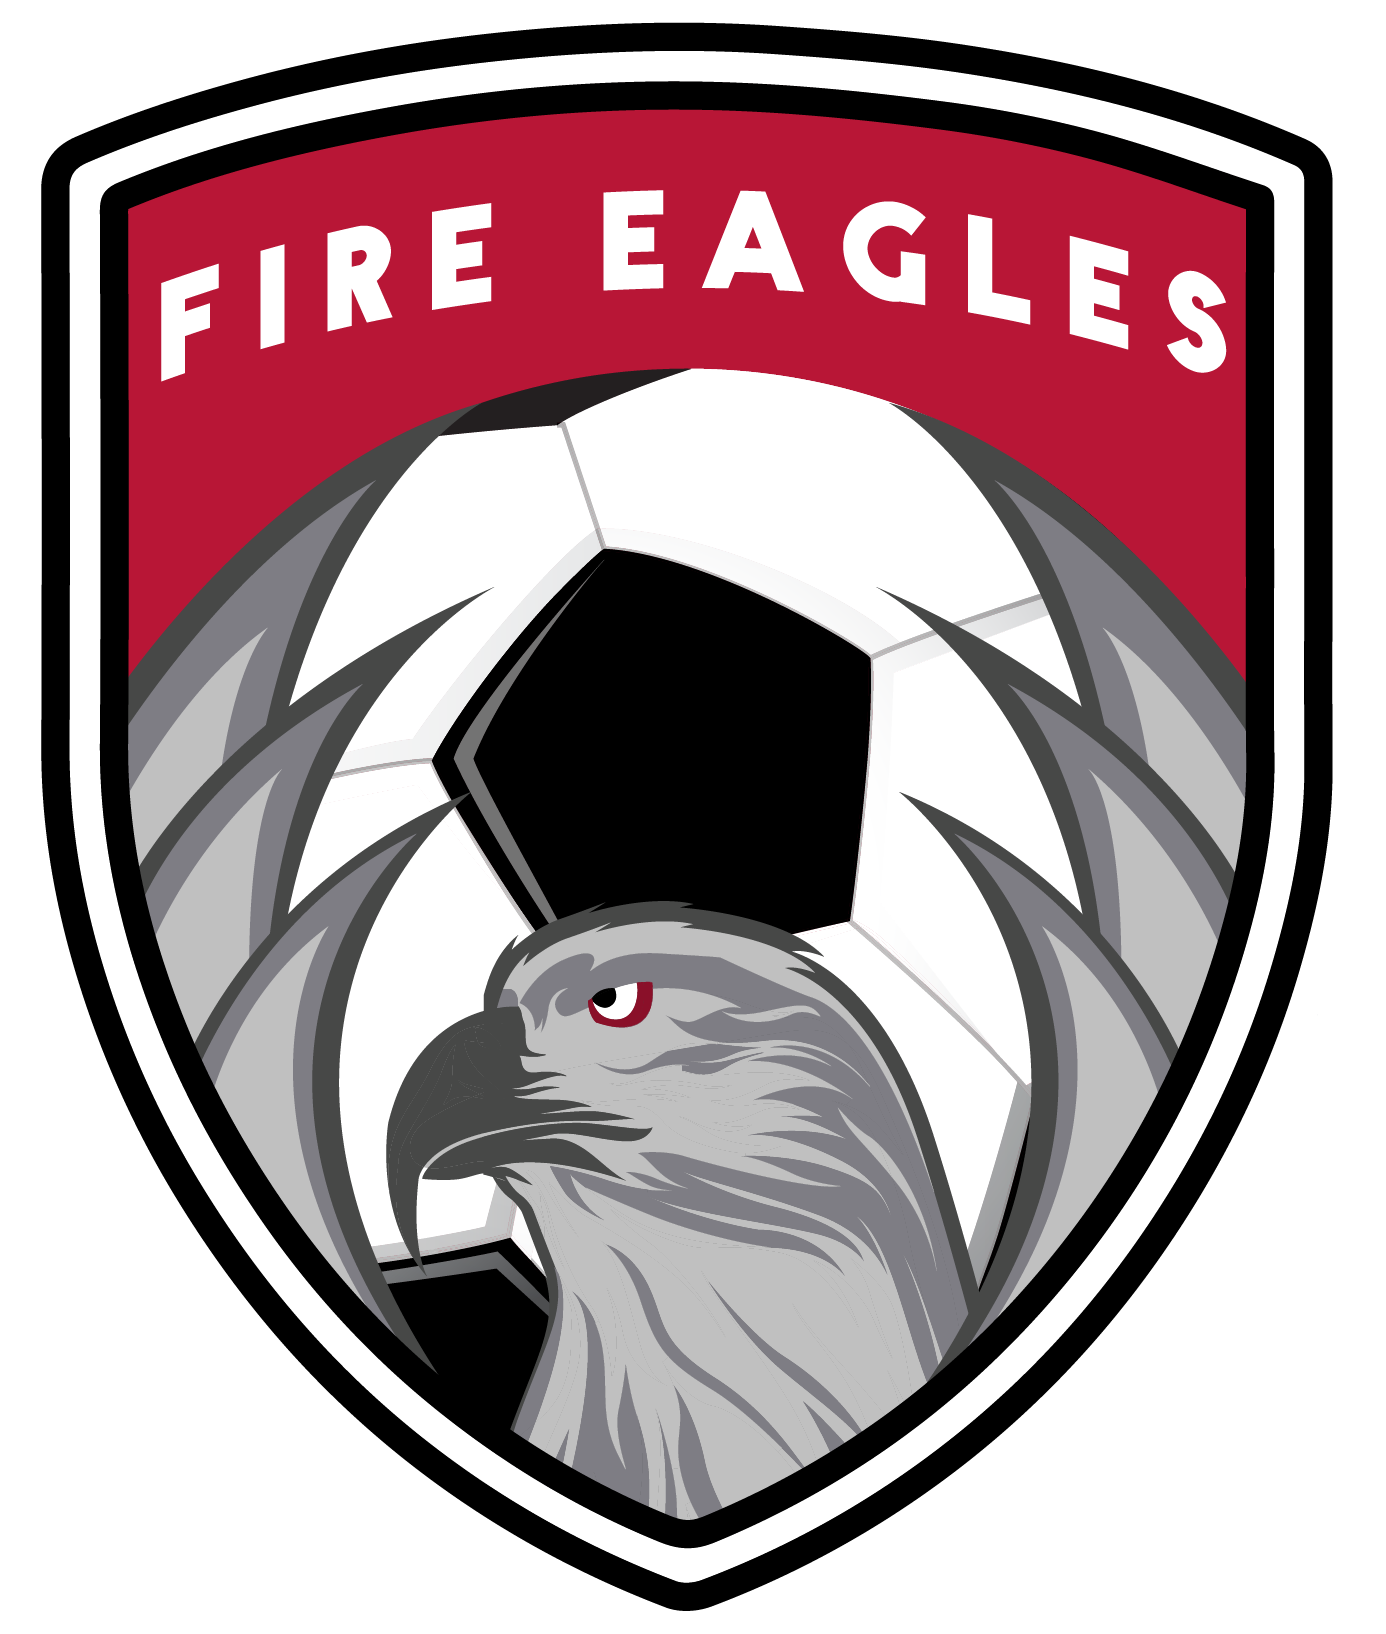 Logo for the Naperville Fire Eagles soccer team